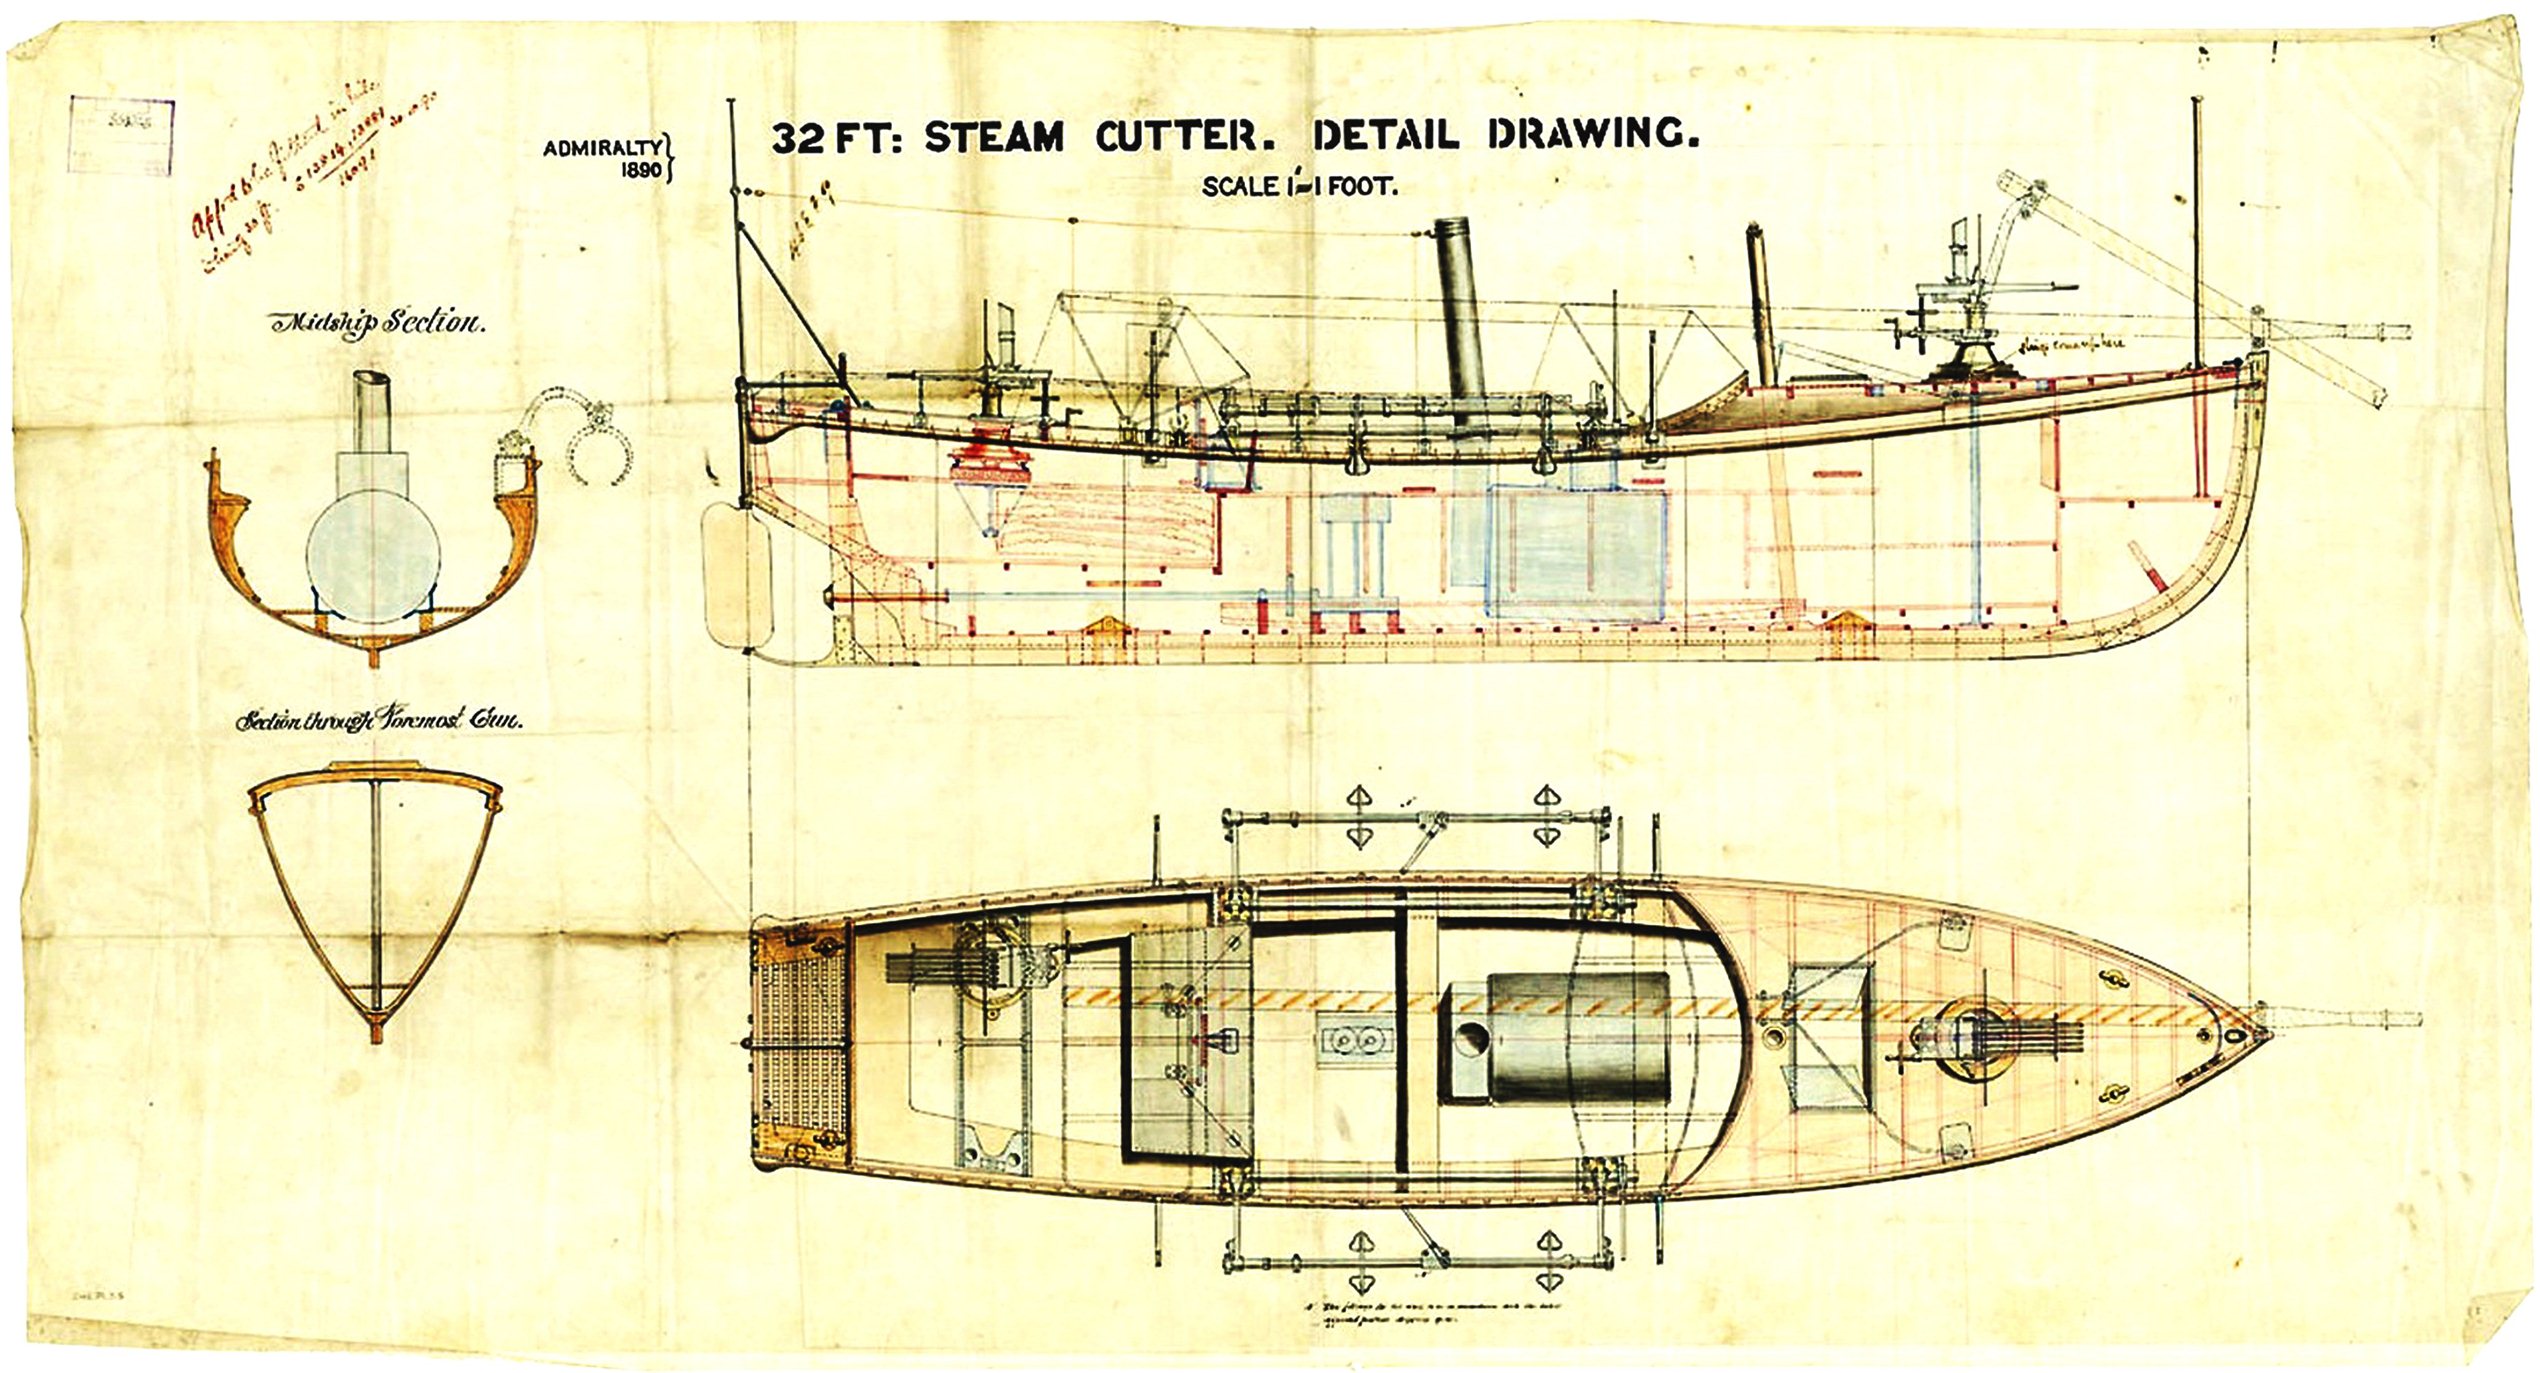 32 ft. Steam Cutter 1890.1 копия копия[2].jpg